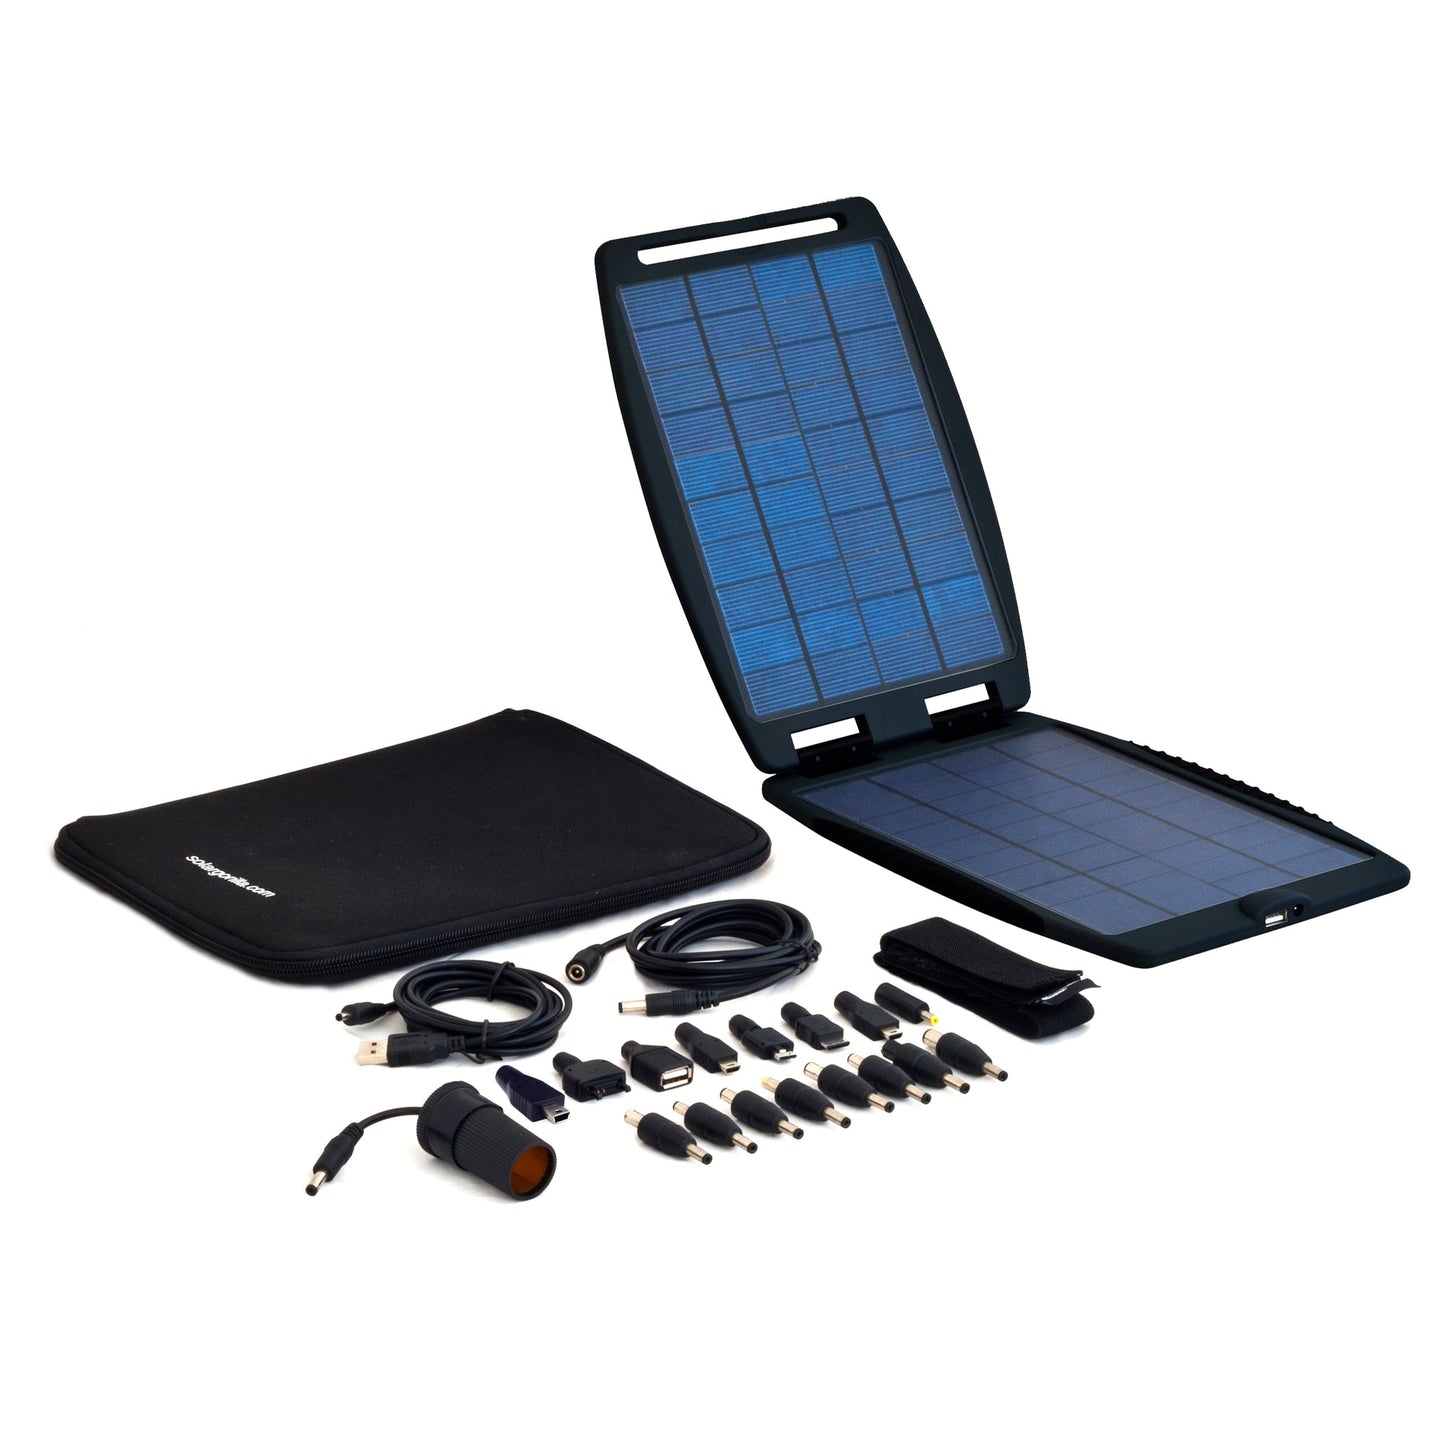 Powertraveller Solargorilla Portable Solar Panel